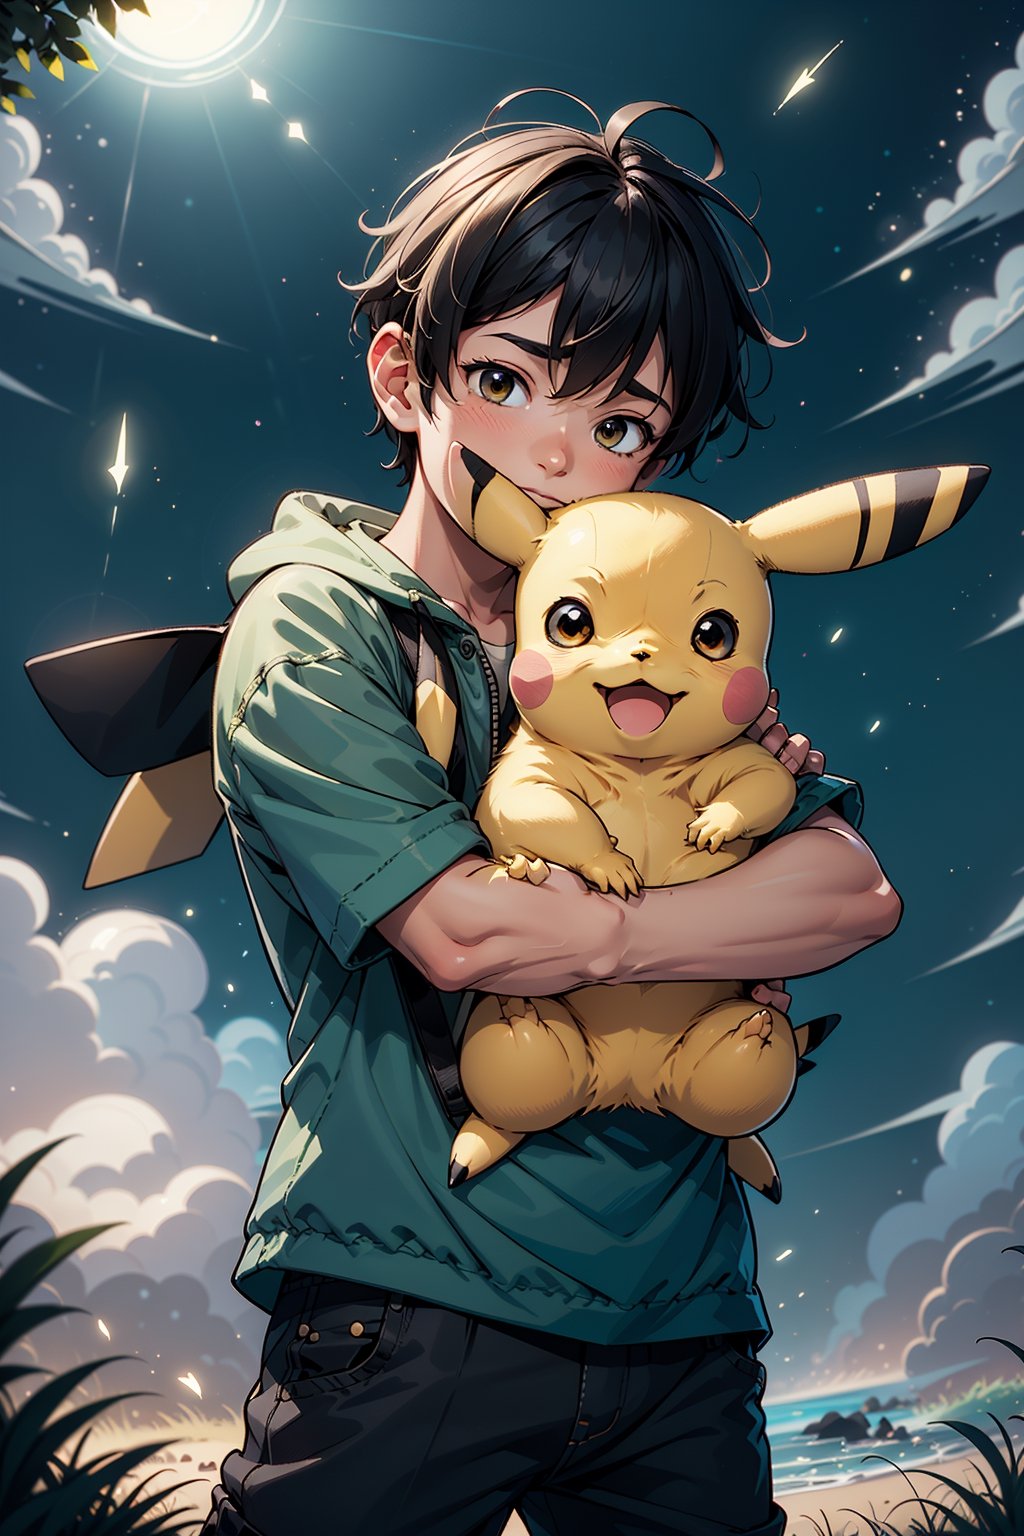 a boy hug a cartoon "pikachu"